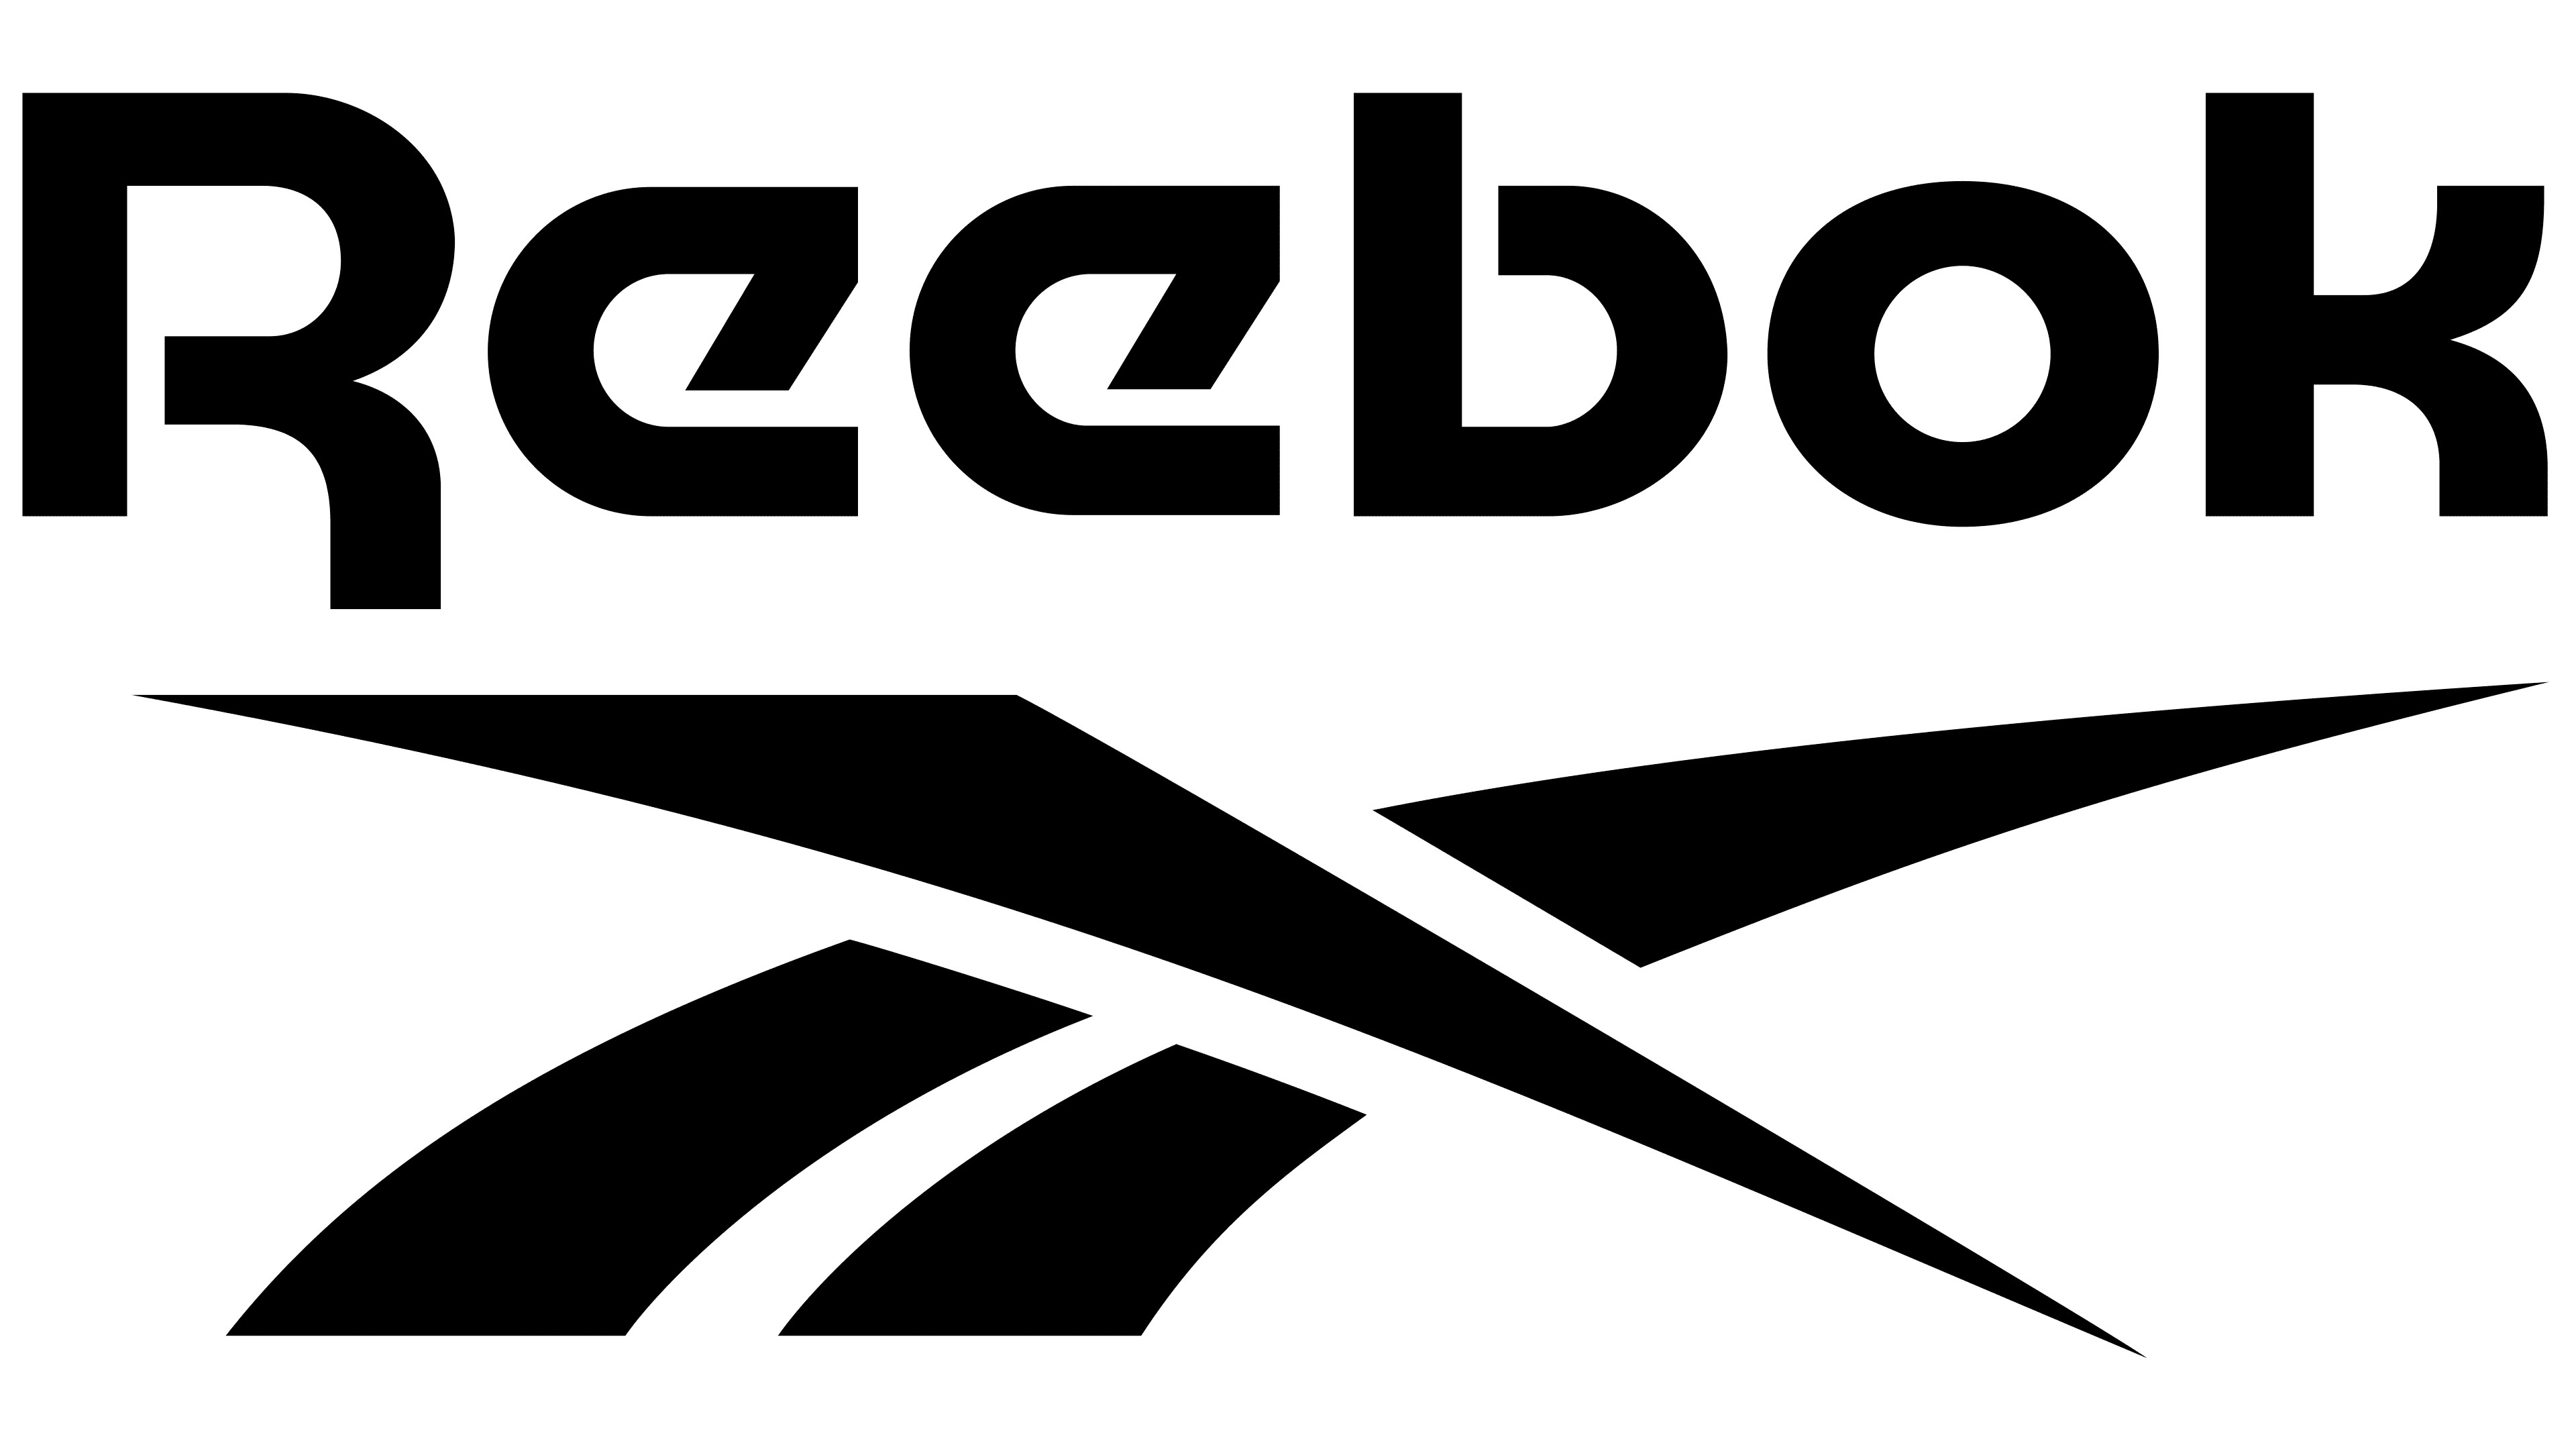 park buurman Bloemlezing Reebok Logo and symbol, meaning, history, PNG, brand